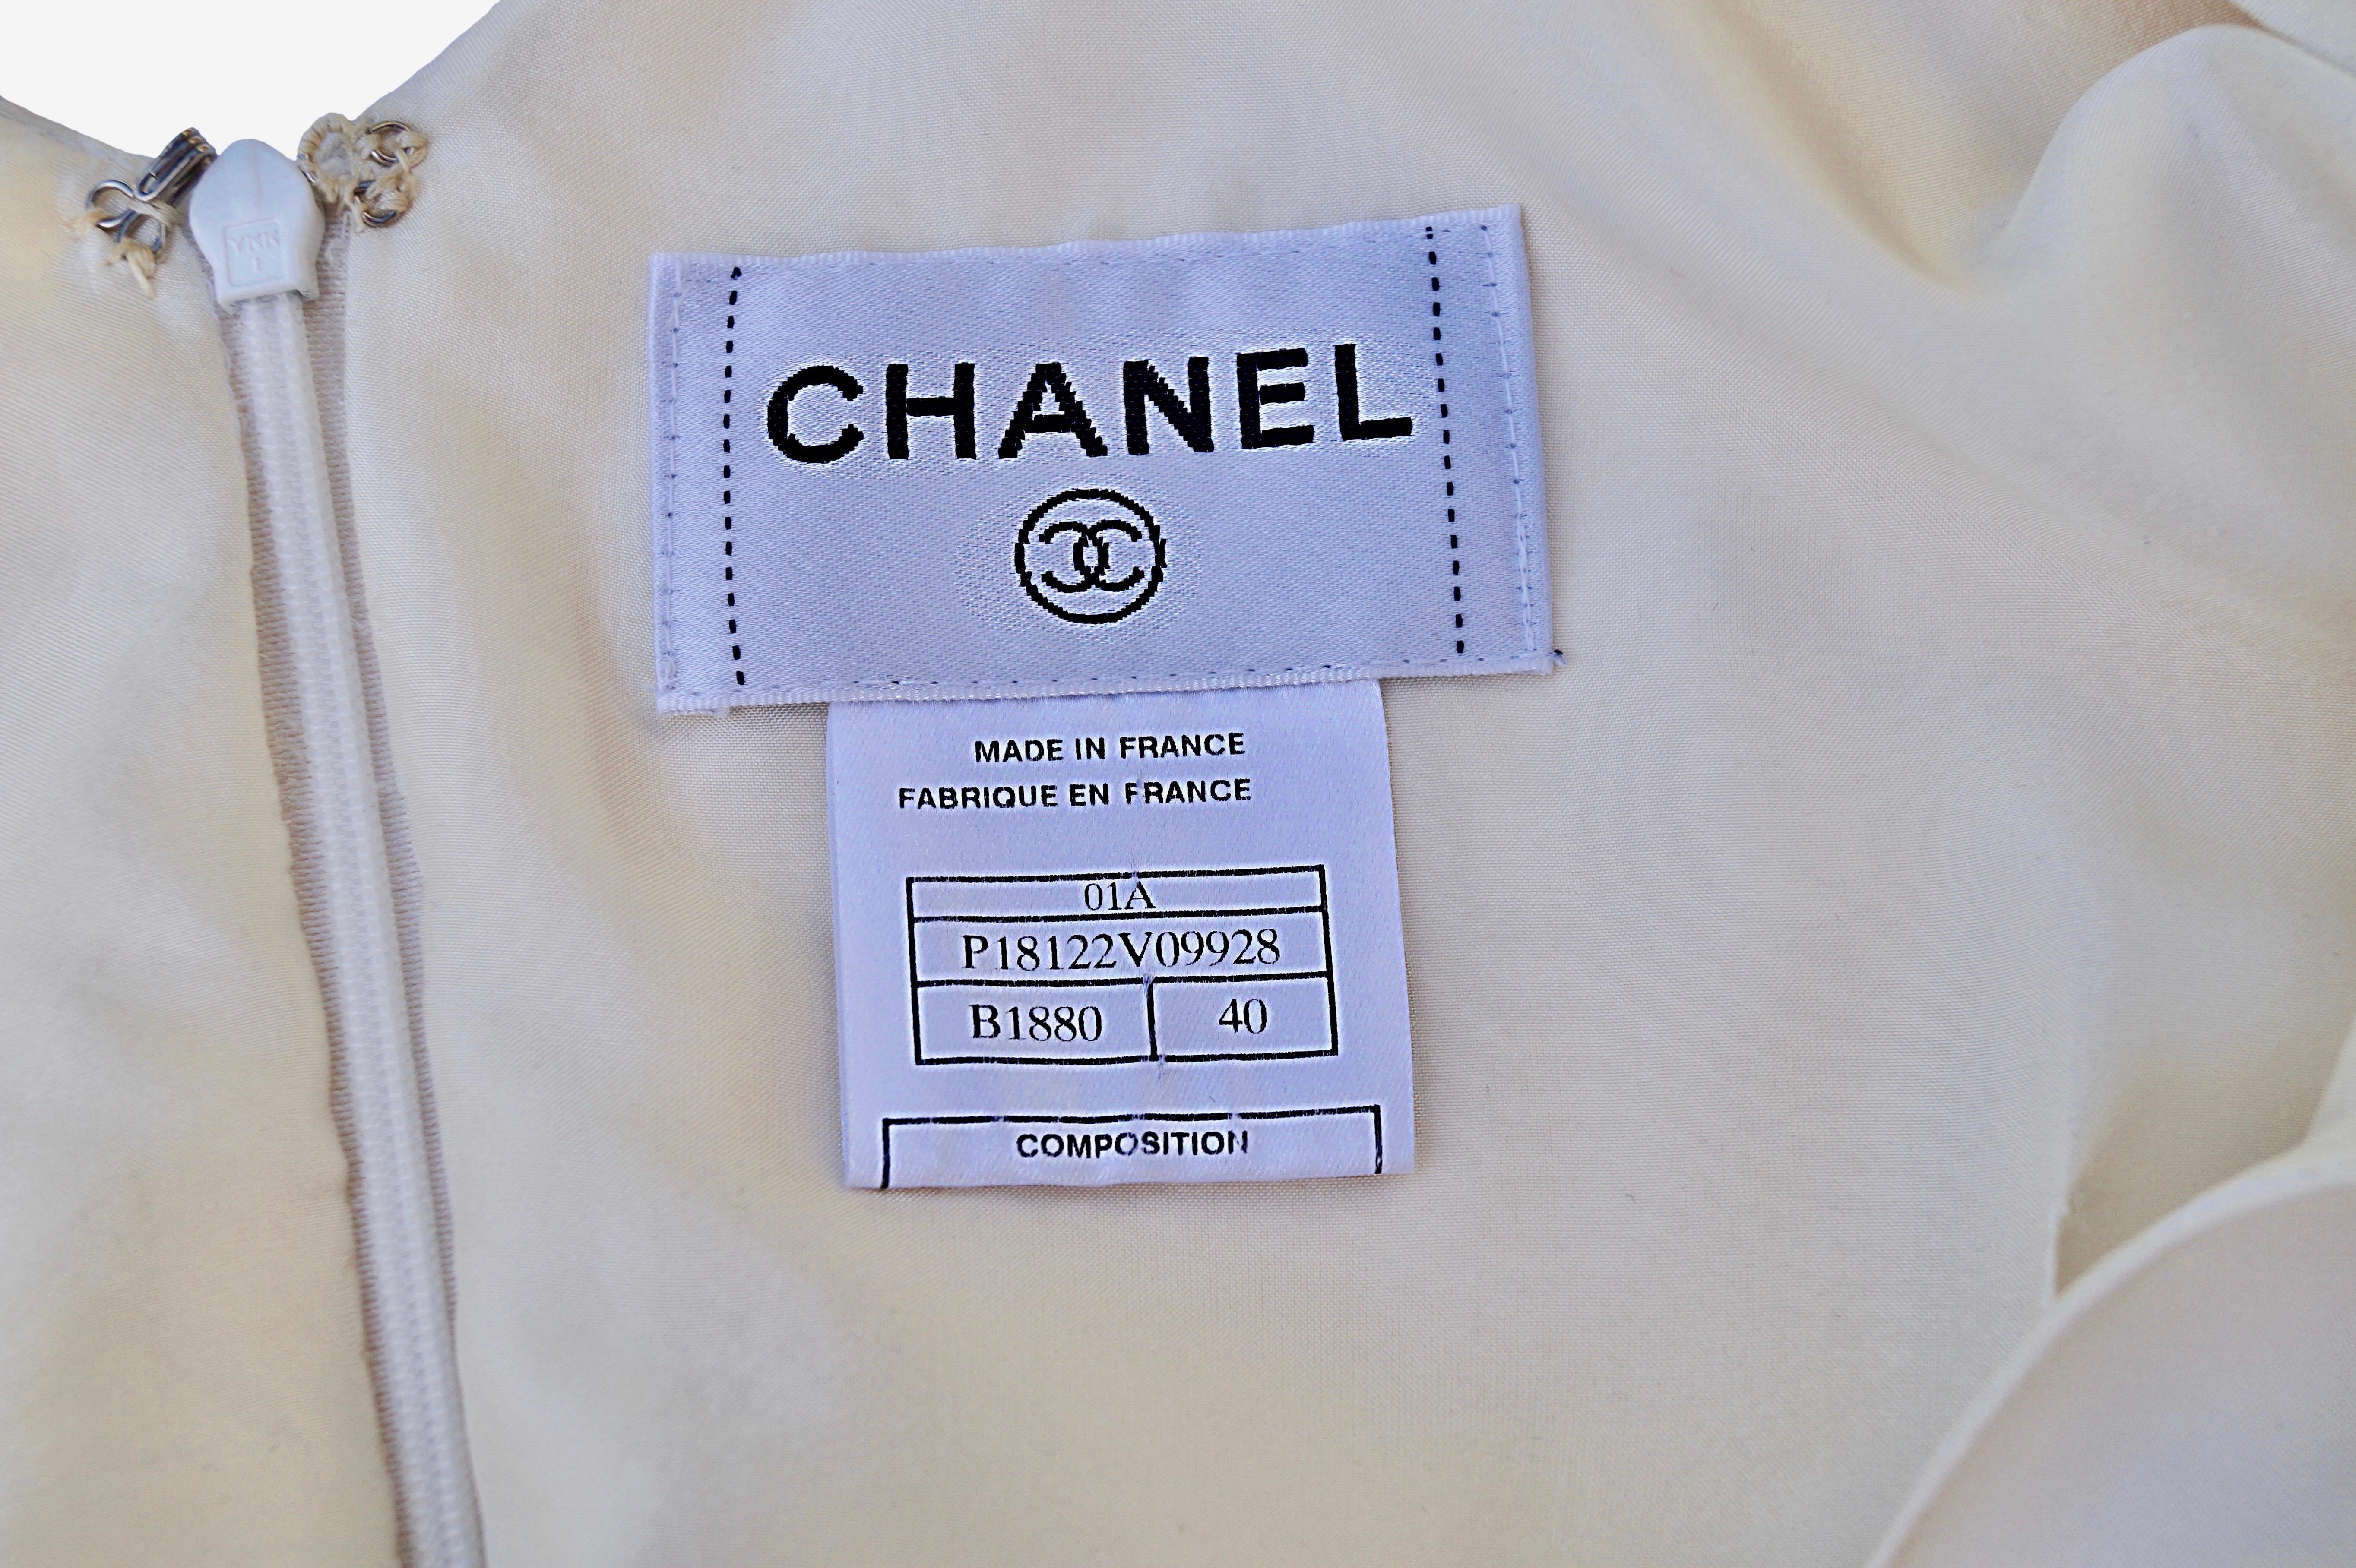 CHANEL black/white silk satin dress FR 40 Fall 2001  01A For Sale 1